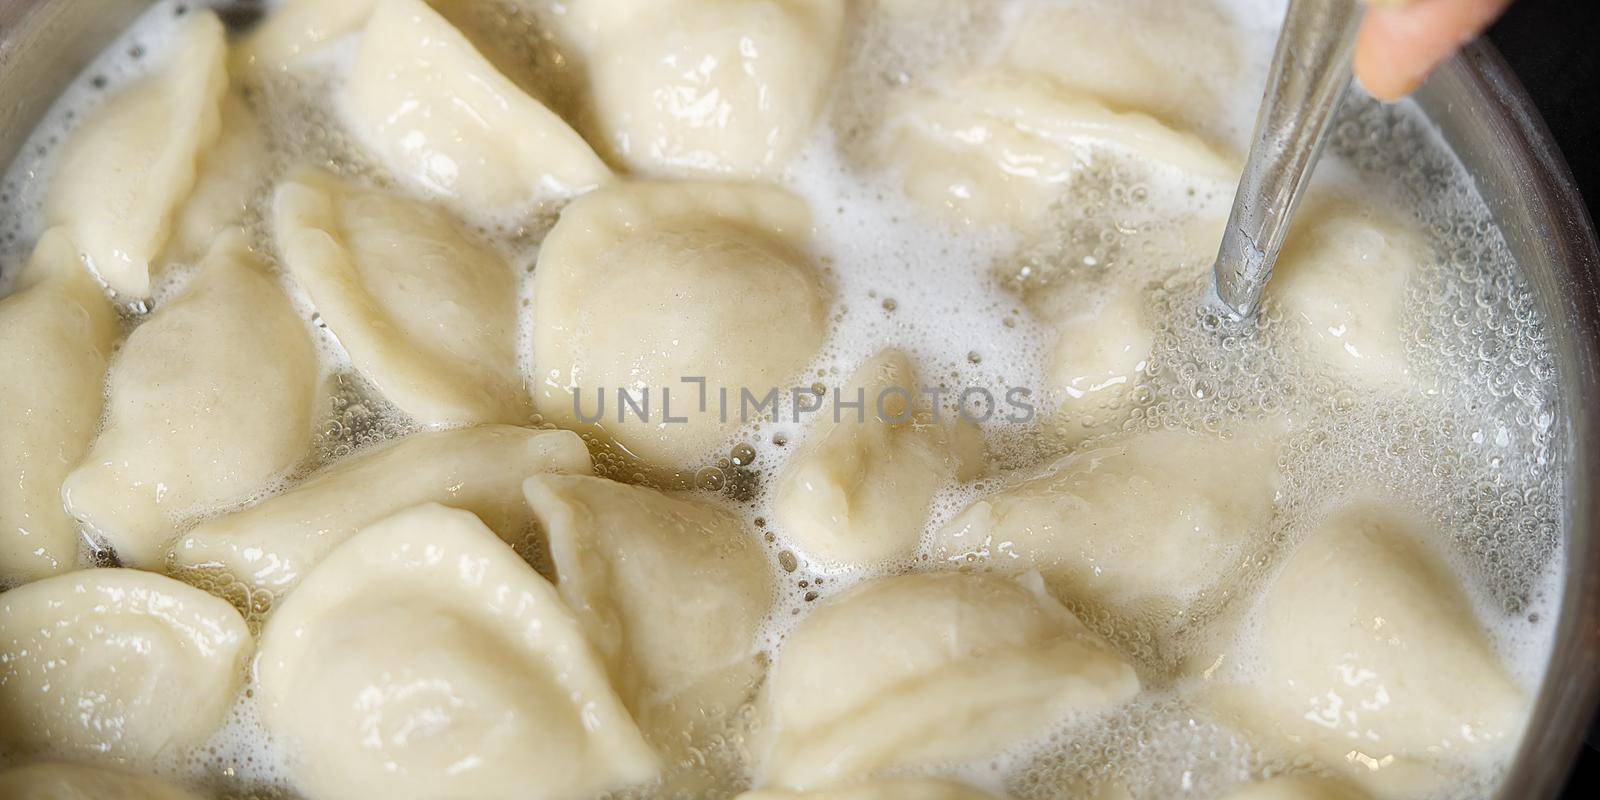 Meat Dumplings in boiling water. Meat dumplings are boiled in a pot of boiling water. Home fast food